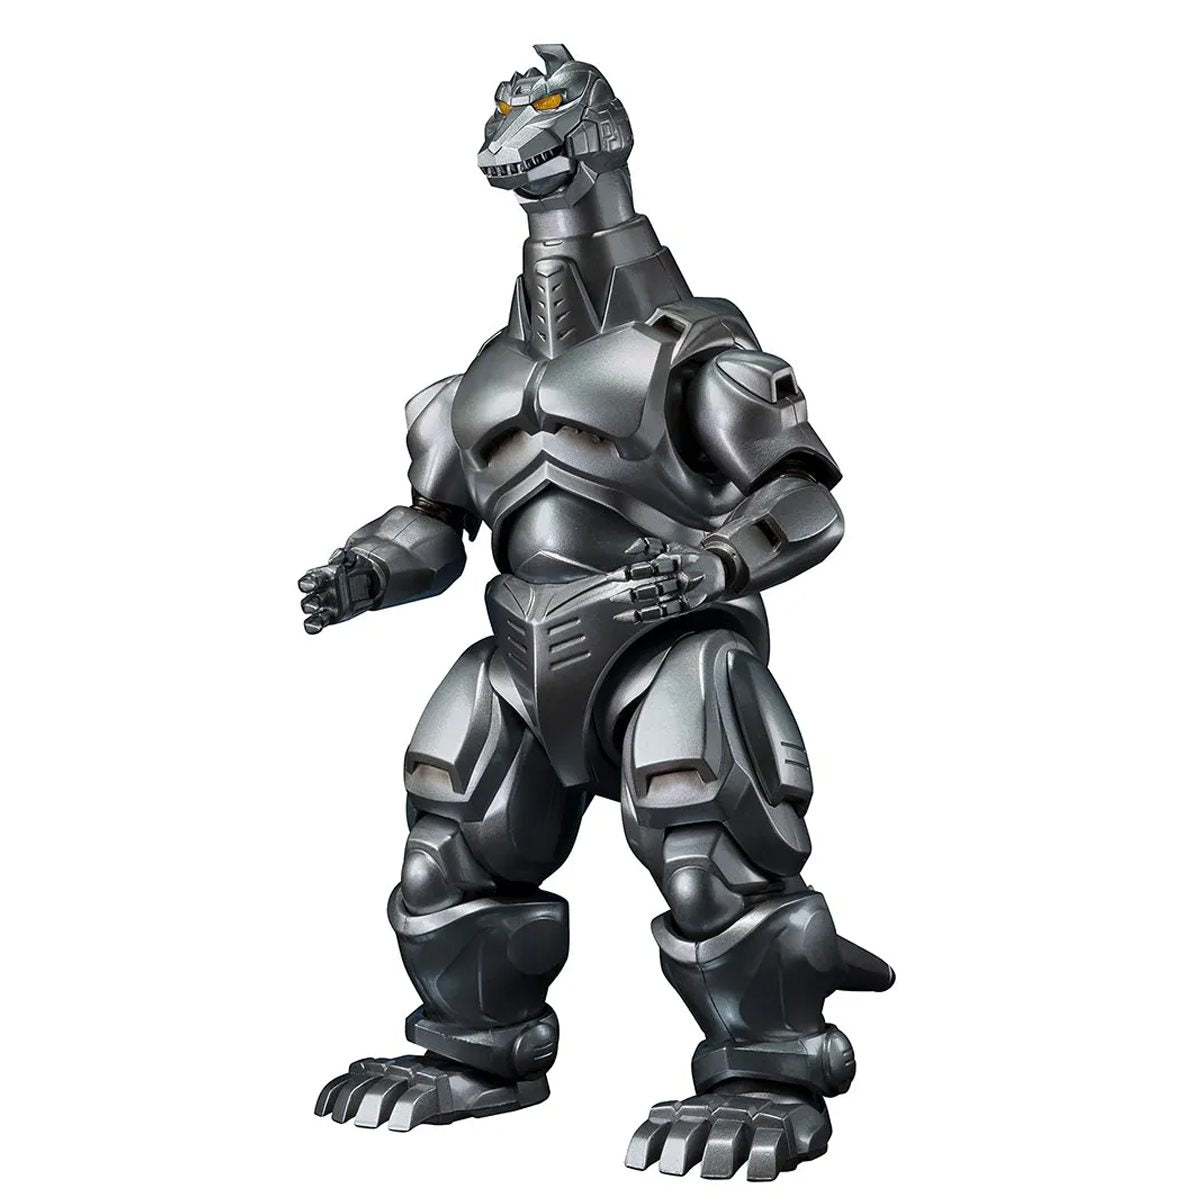 Godzilla vs. Mechagodzilla, Garuda, and Fire Rodan Makuhari Decisive Battle Version S.H.MonsterArts Action Figure